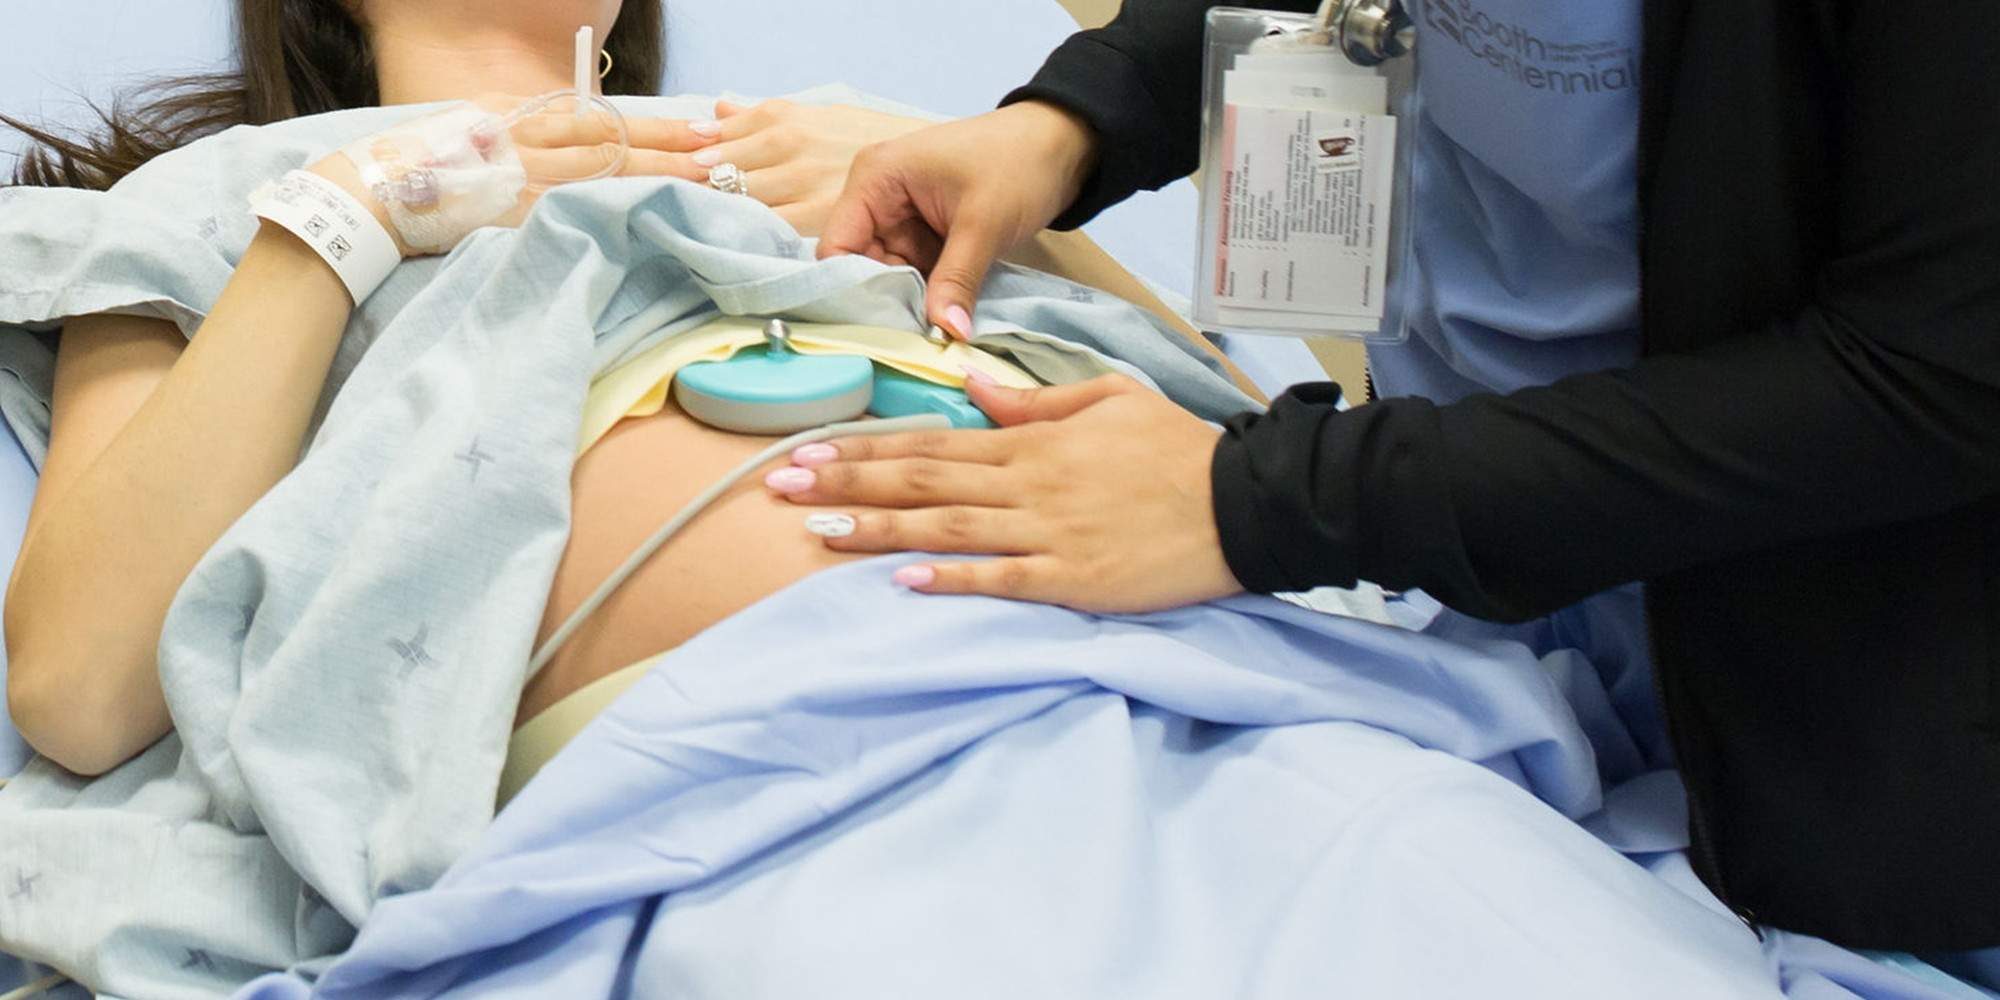 A nurse examines a pregnant woman's belly